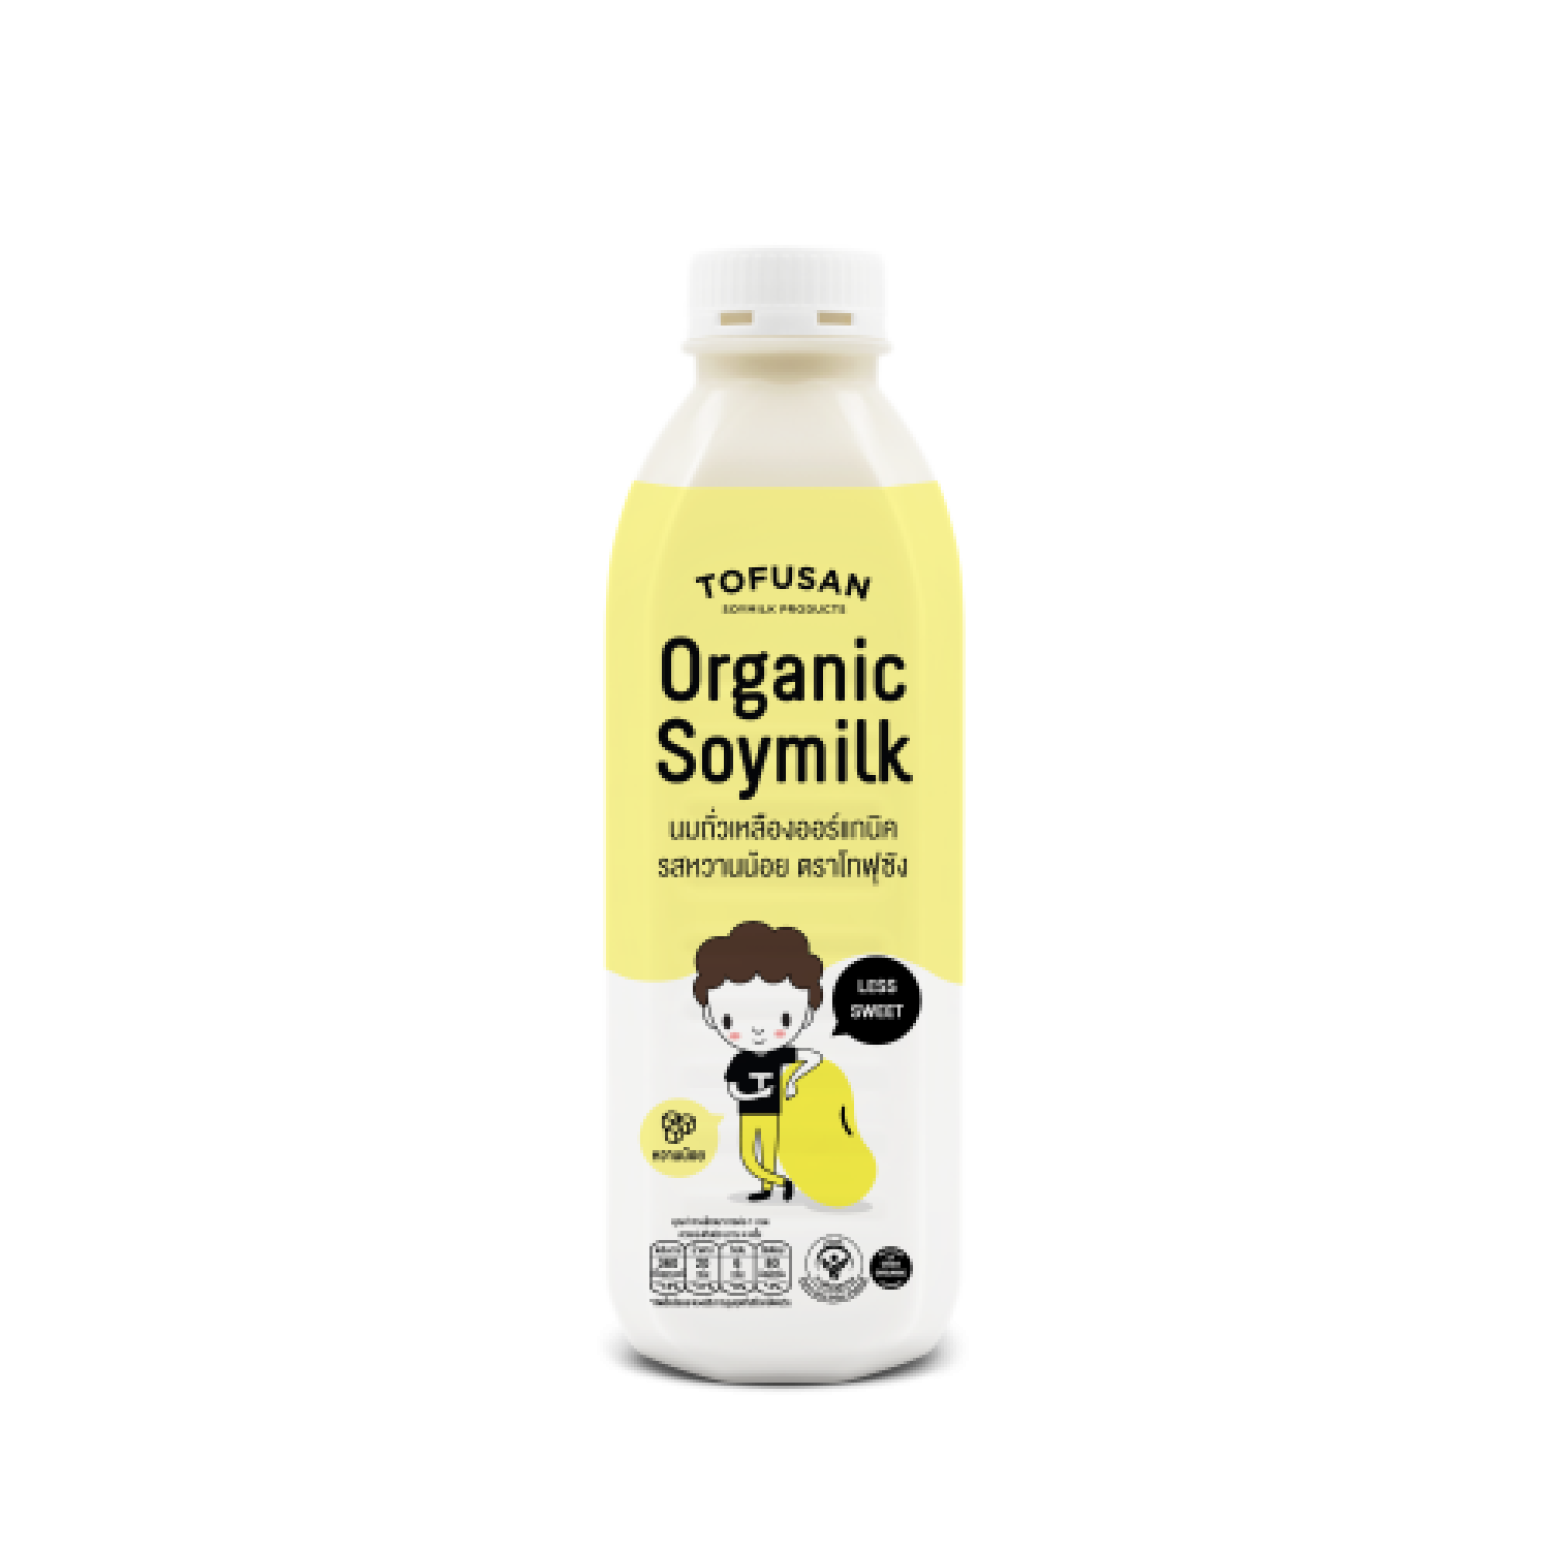 Organic soy milk less sweet